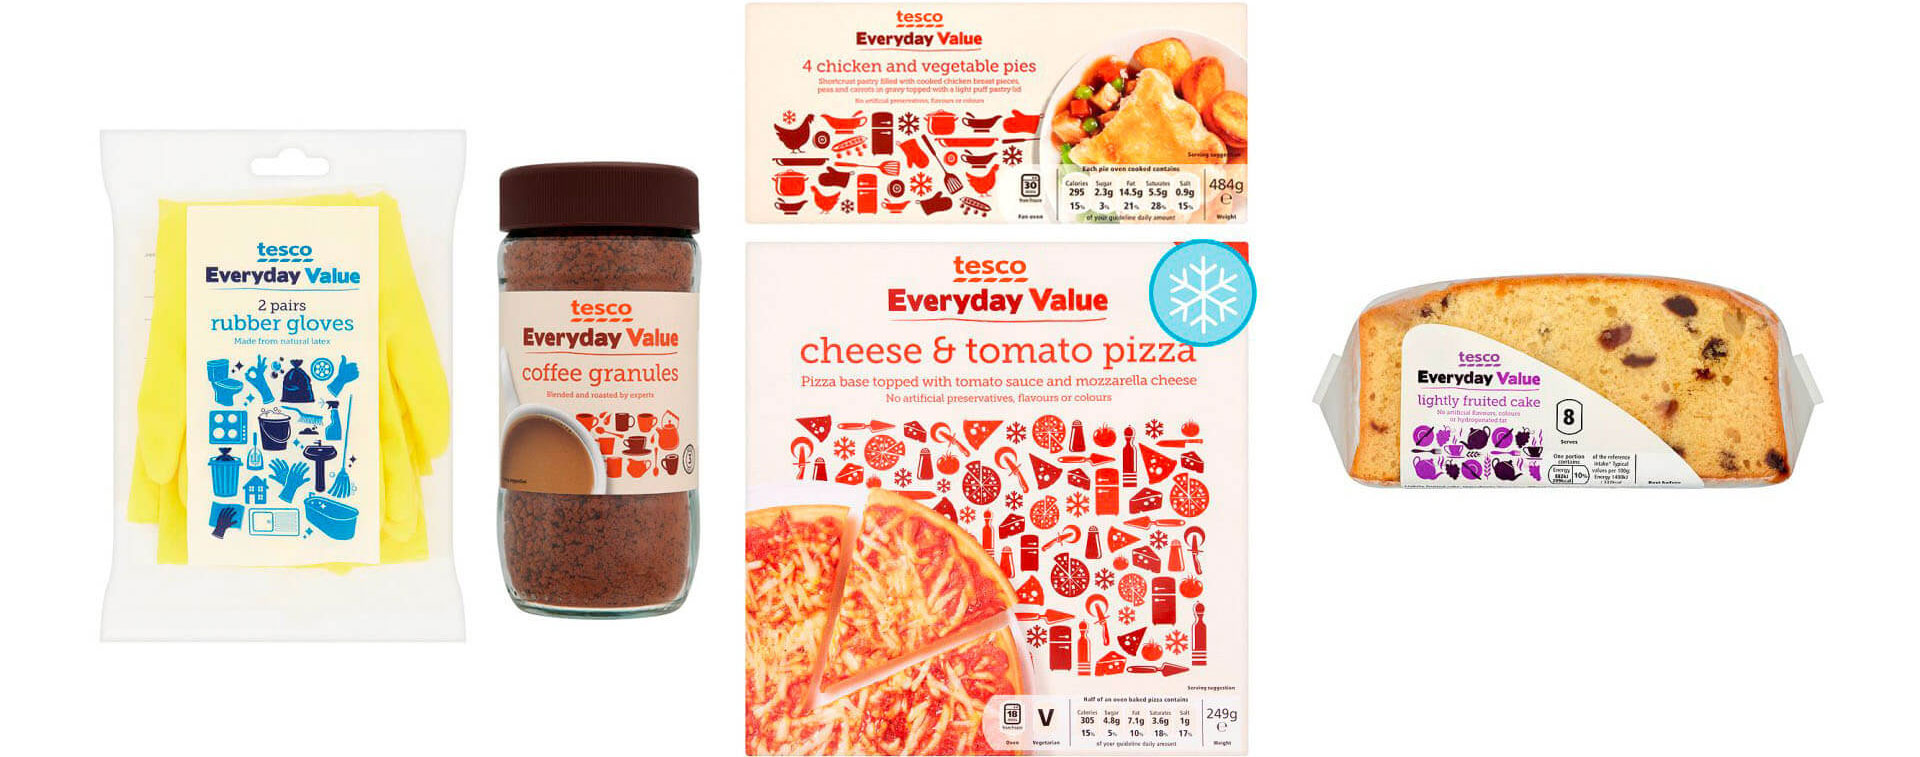 Rebranding Tesco brand identity on food packaging